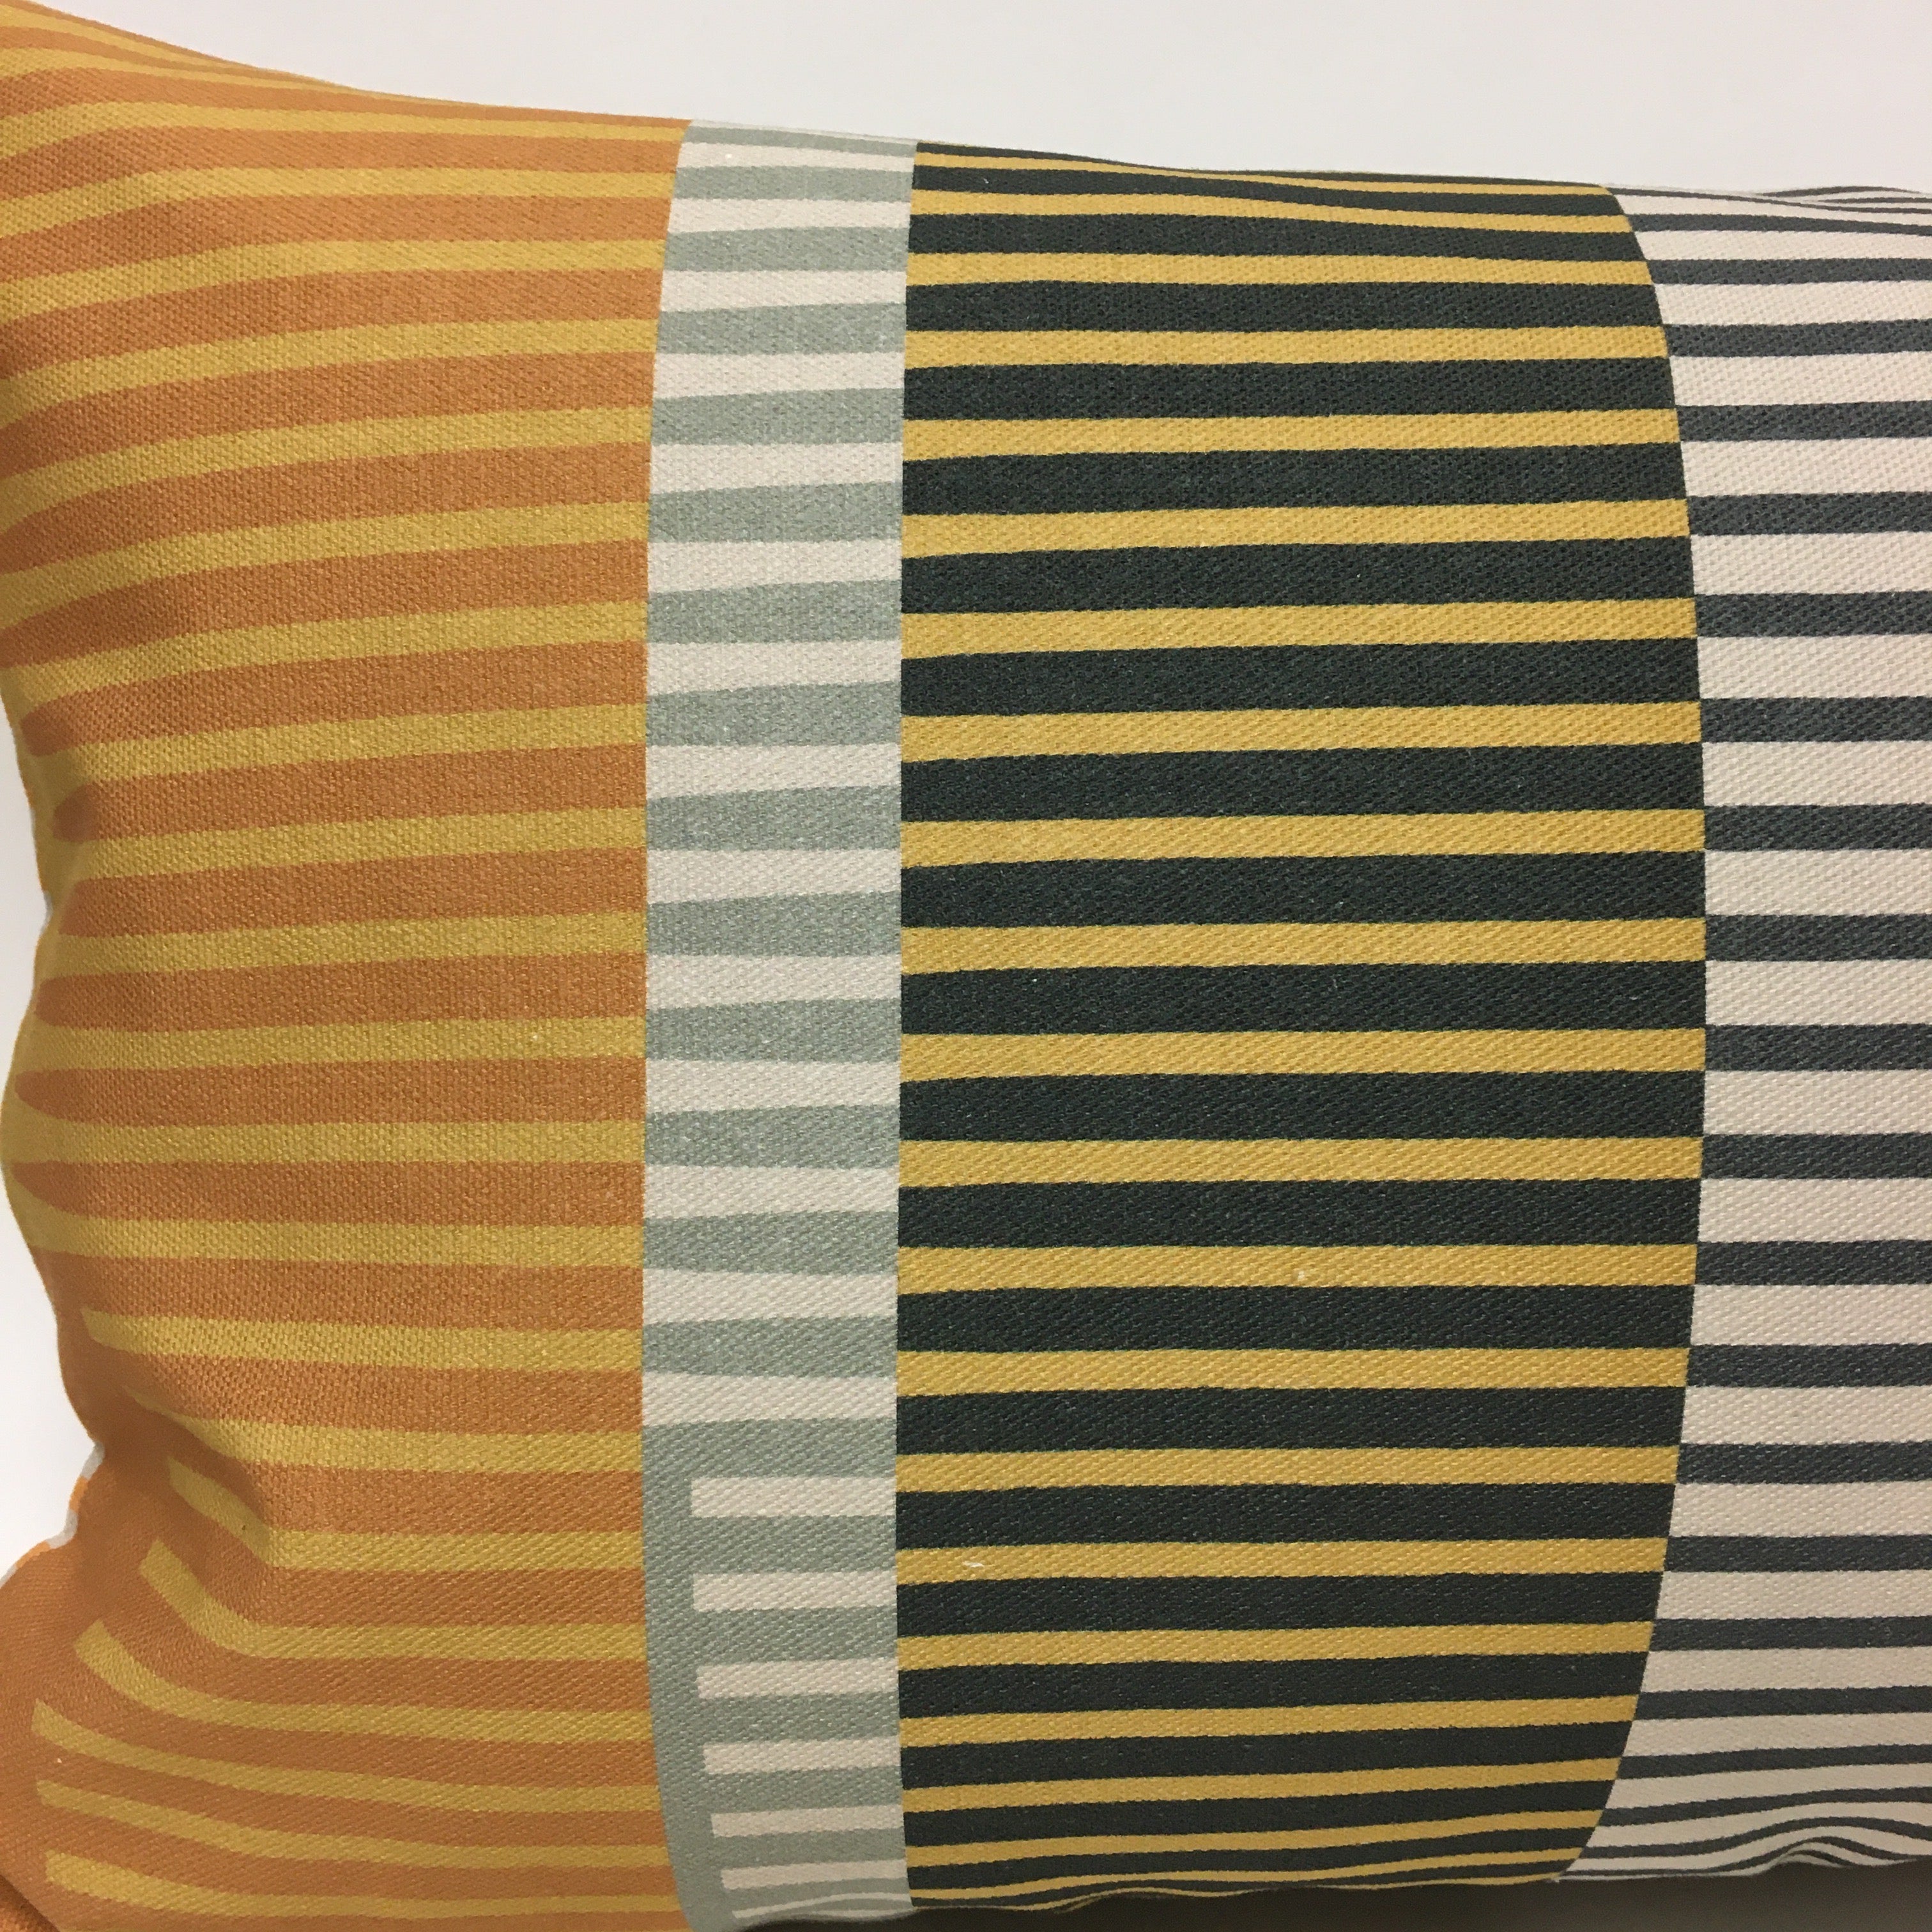 Combed Stripe Cushion - Ochre, graphite + mustard